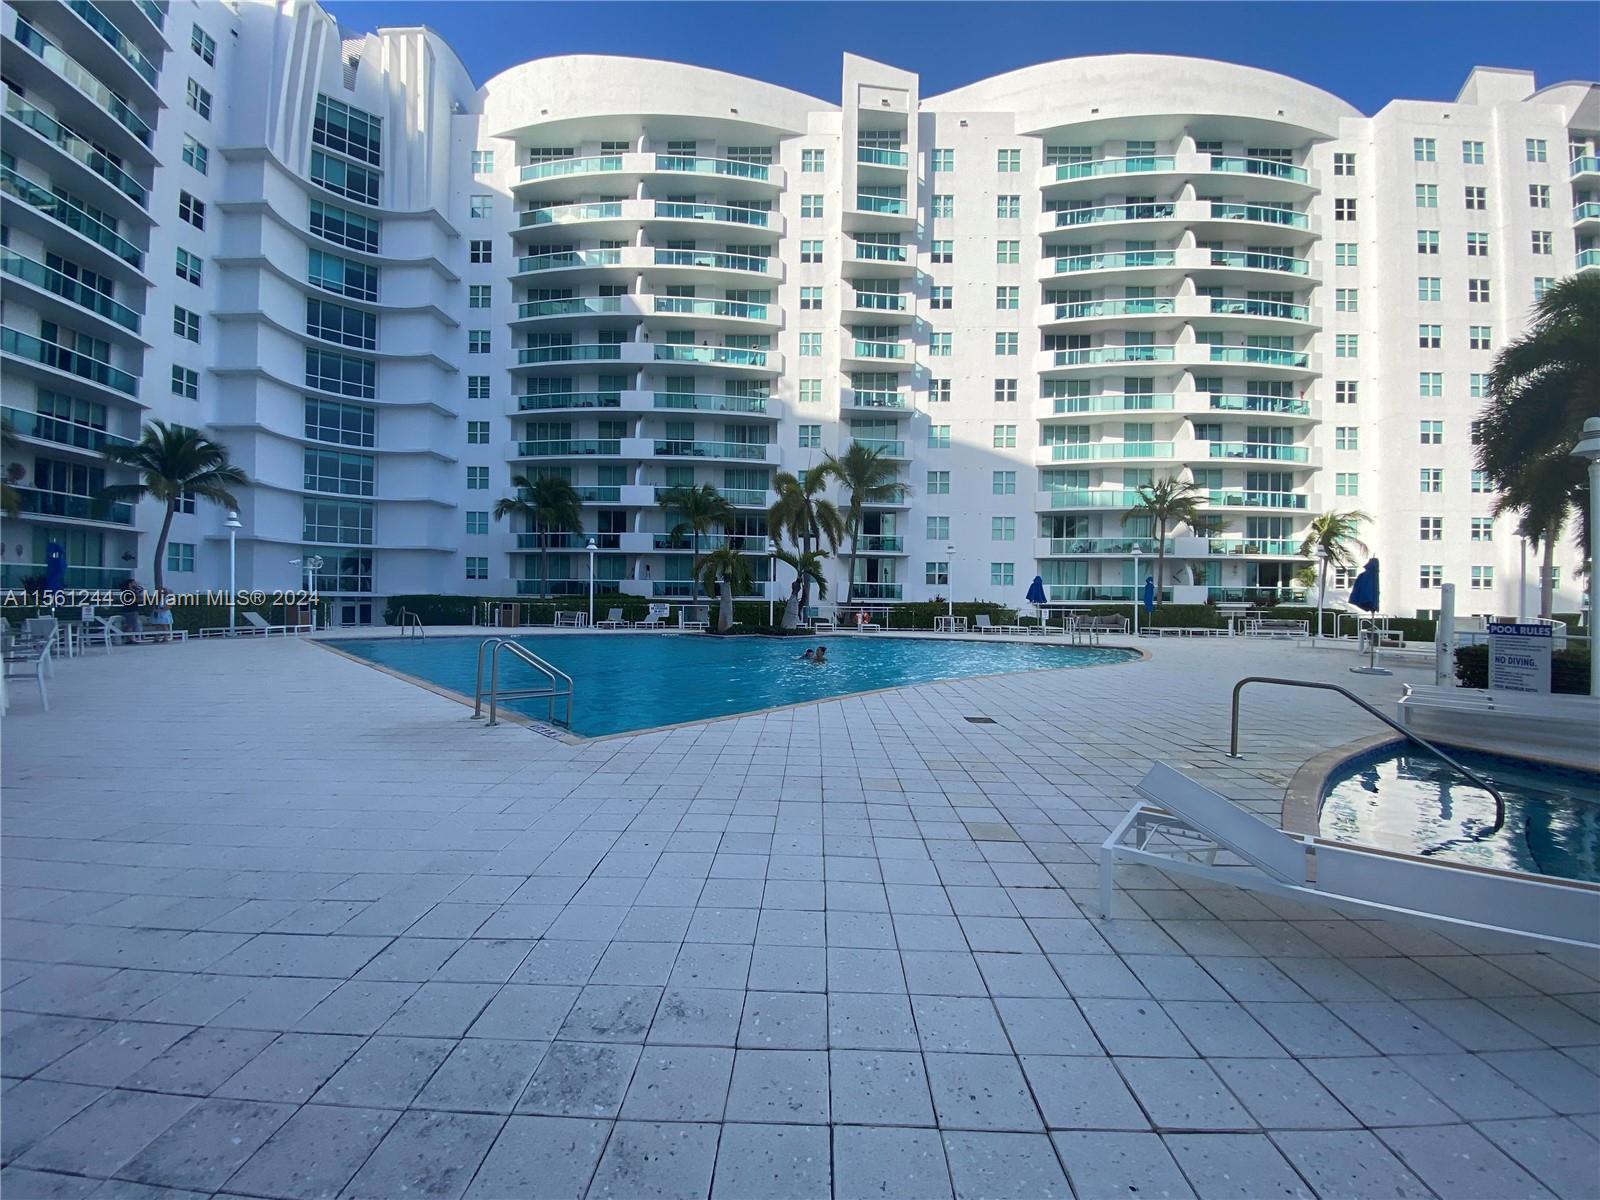 Property for Sale at 7900 Harbor Island Dr 513, North Bay Village, Miami-Dade County, Florida - Bedrooms: 3 
Bathrooms: 2  - $727,000